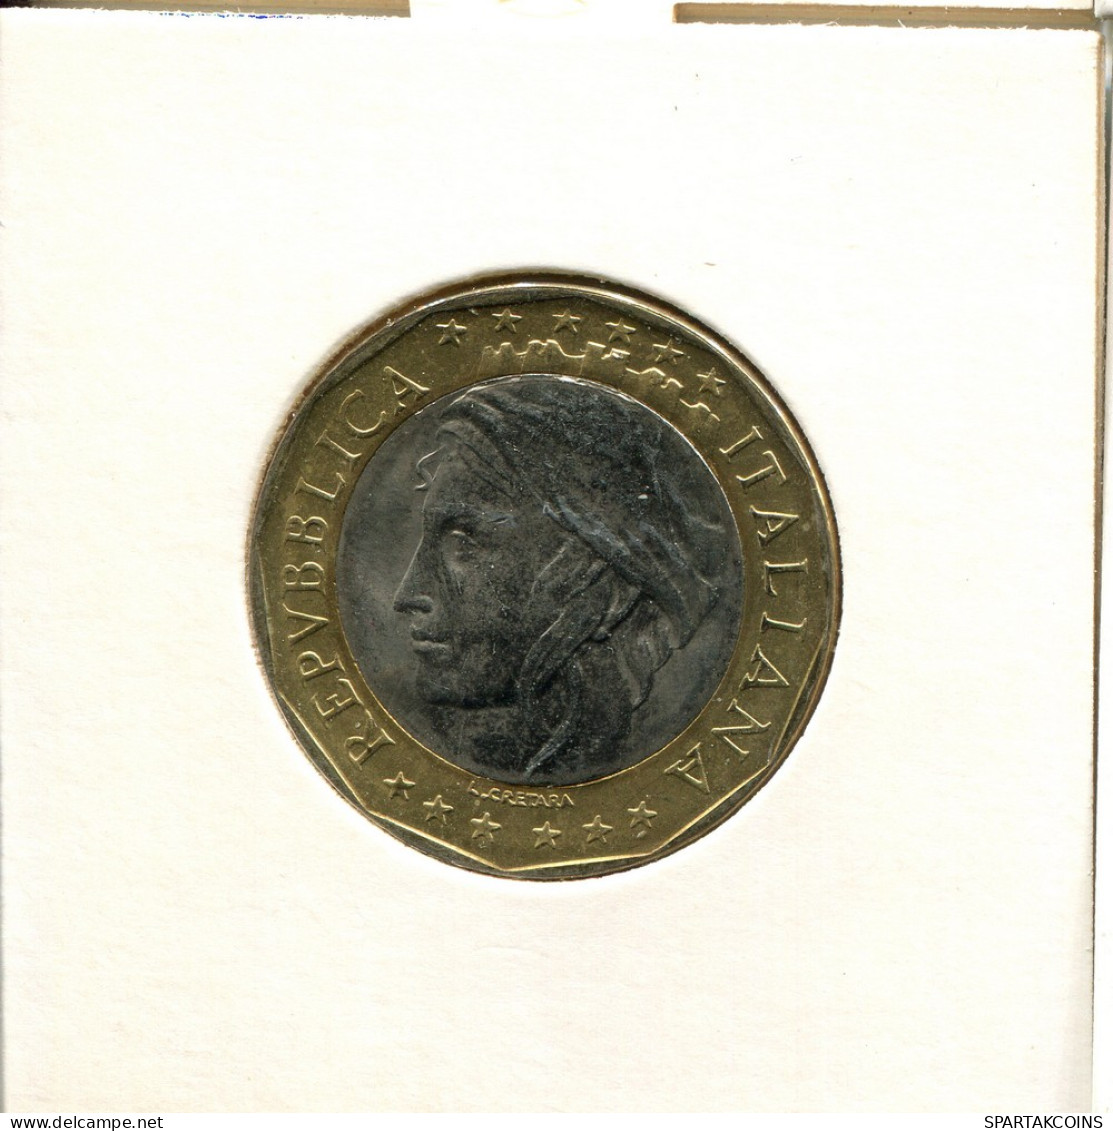 1000 LIRE 1998 ITALY Coin BIMETALLIC #AT819.U - 1 000 Lire